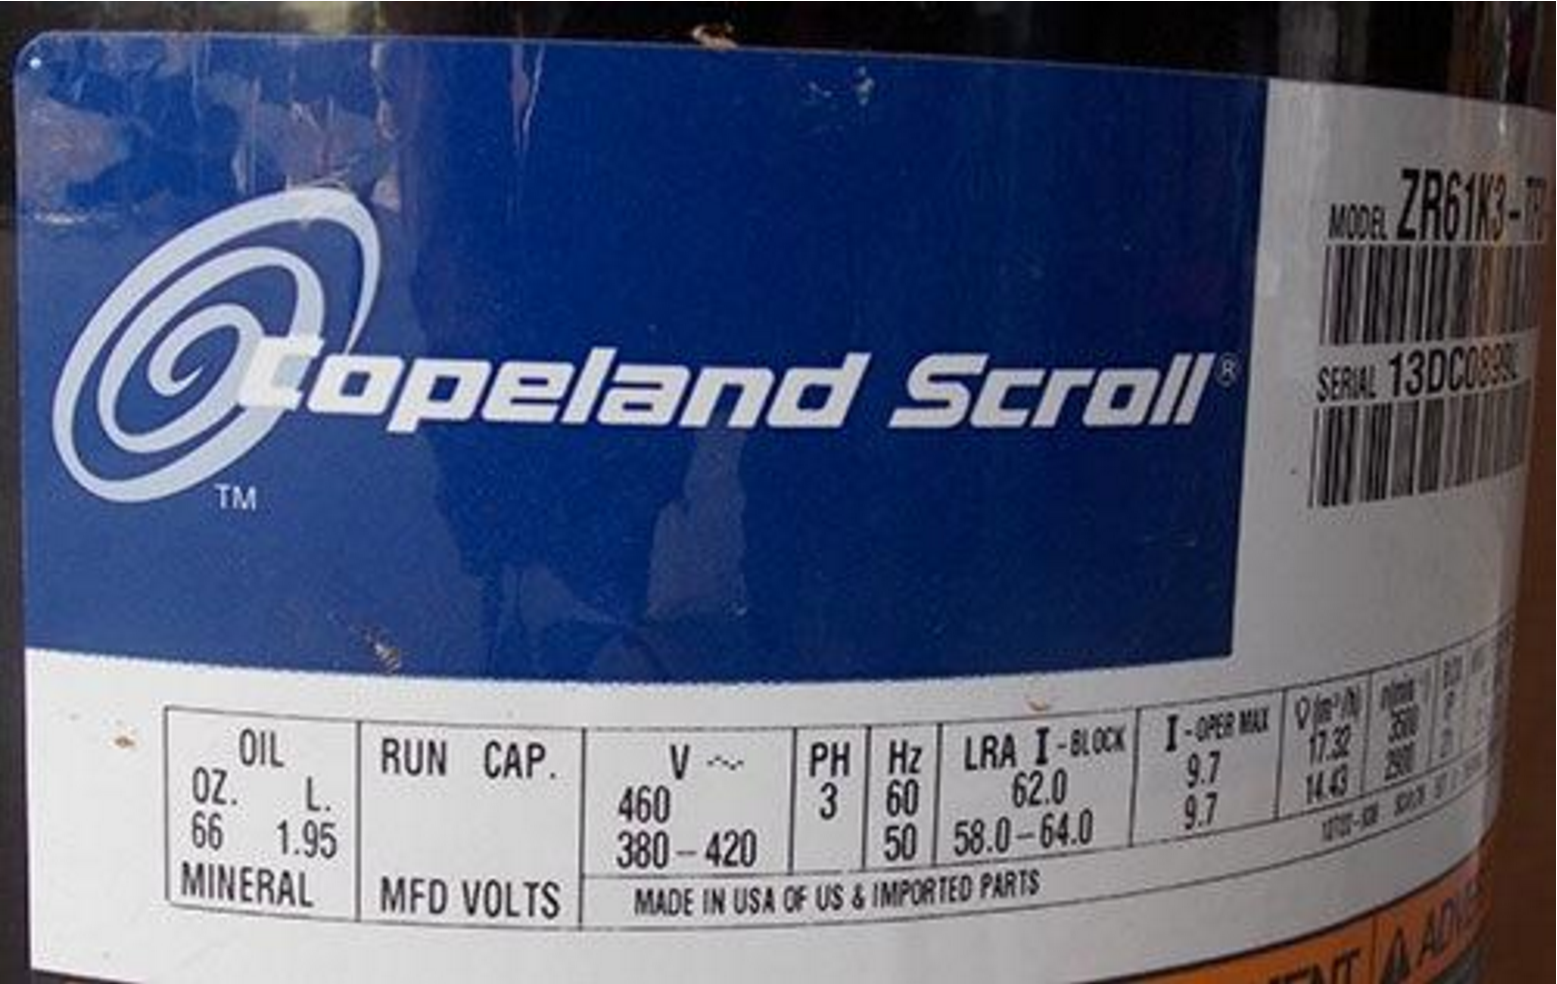 Copeland Scroll compressor manufacturer tag